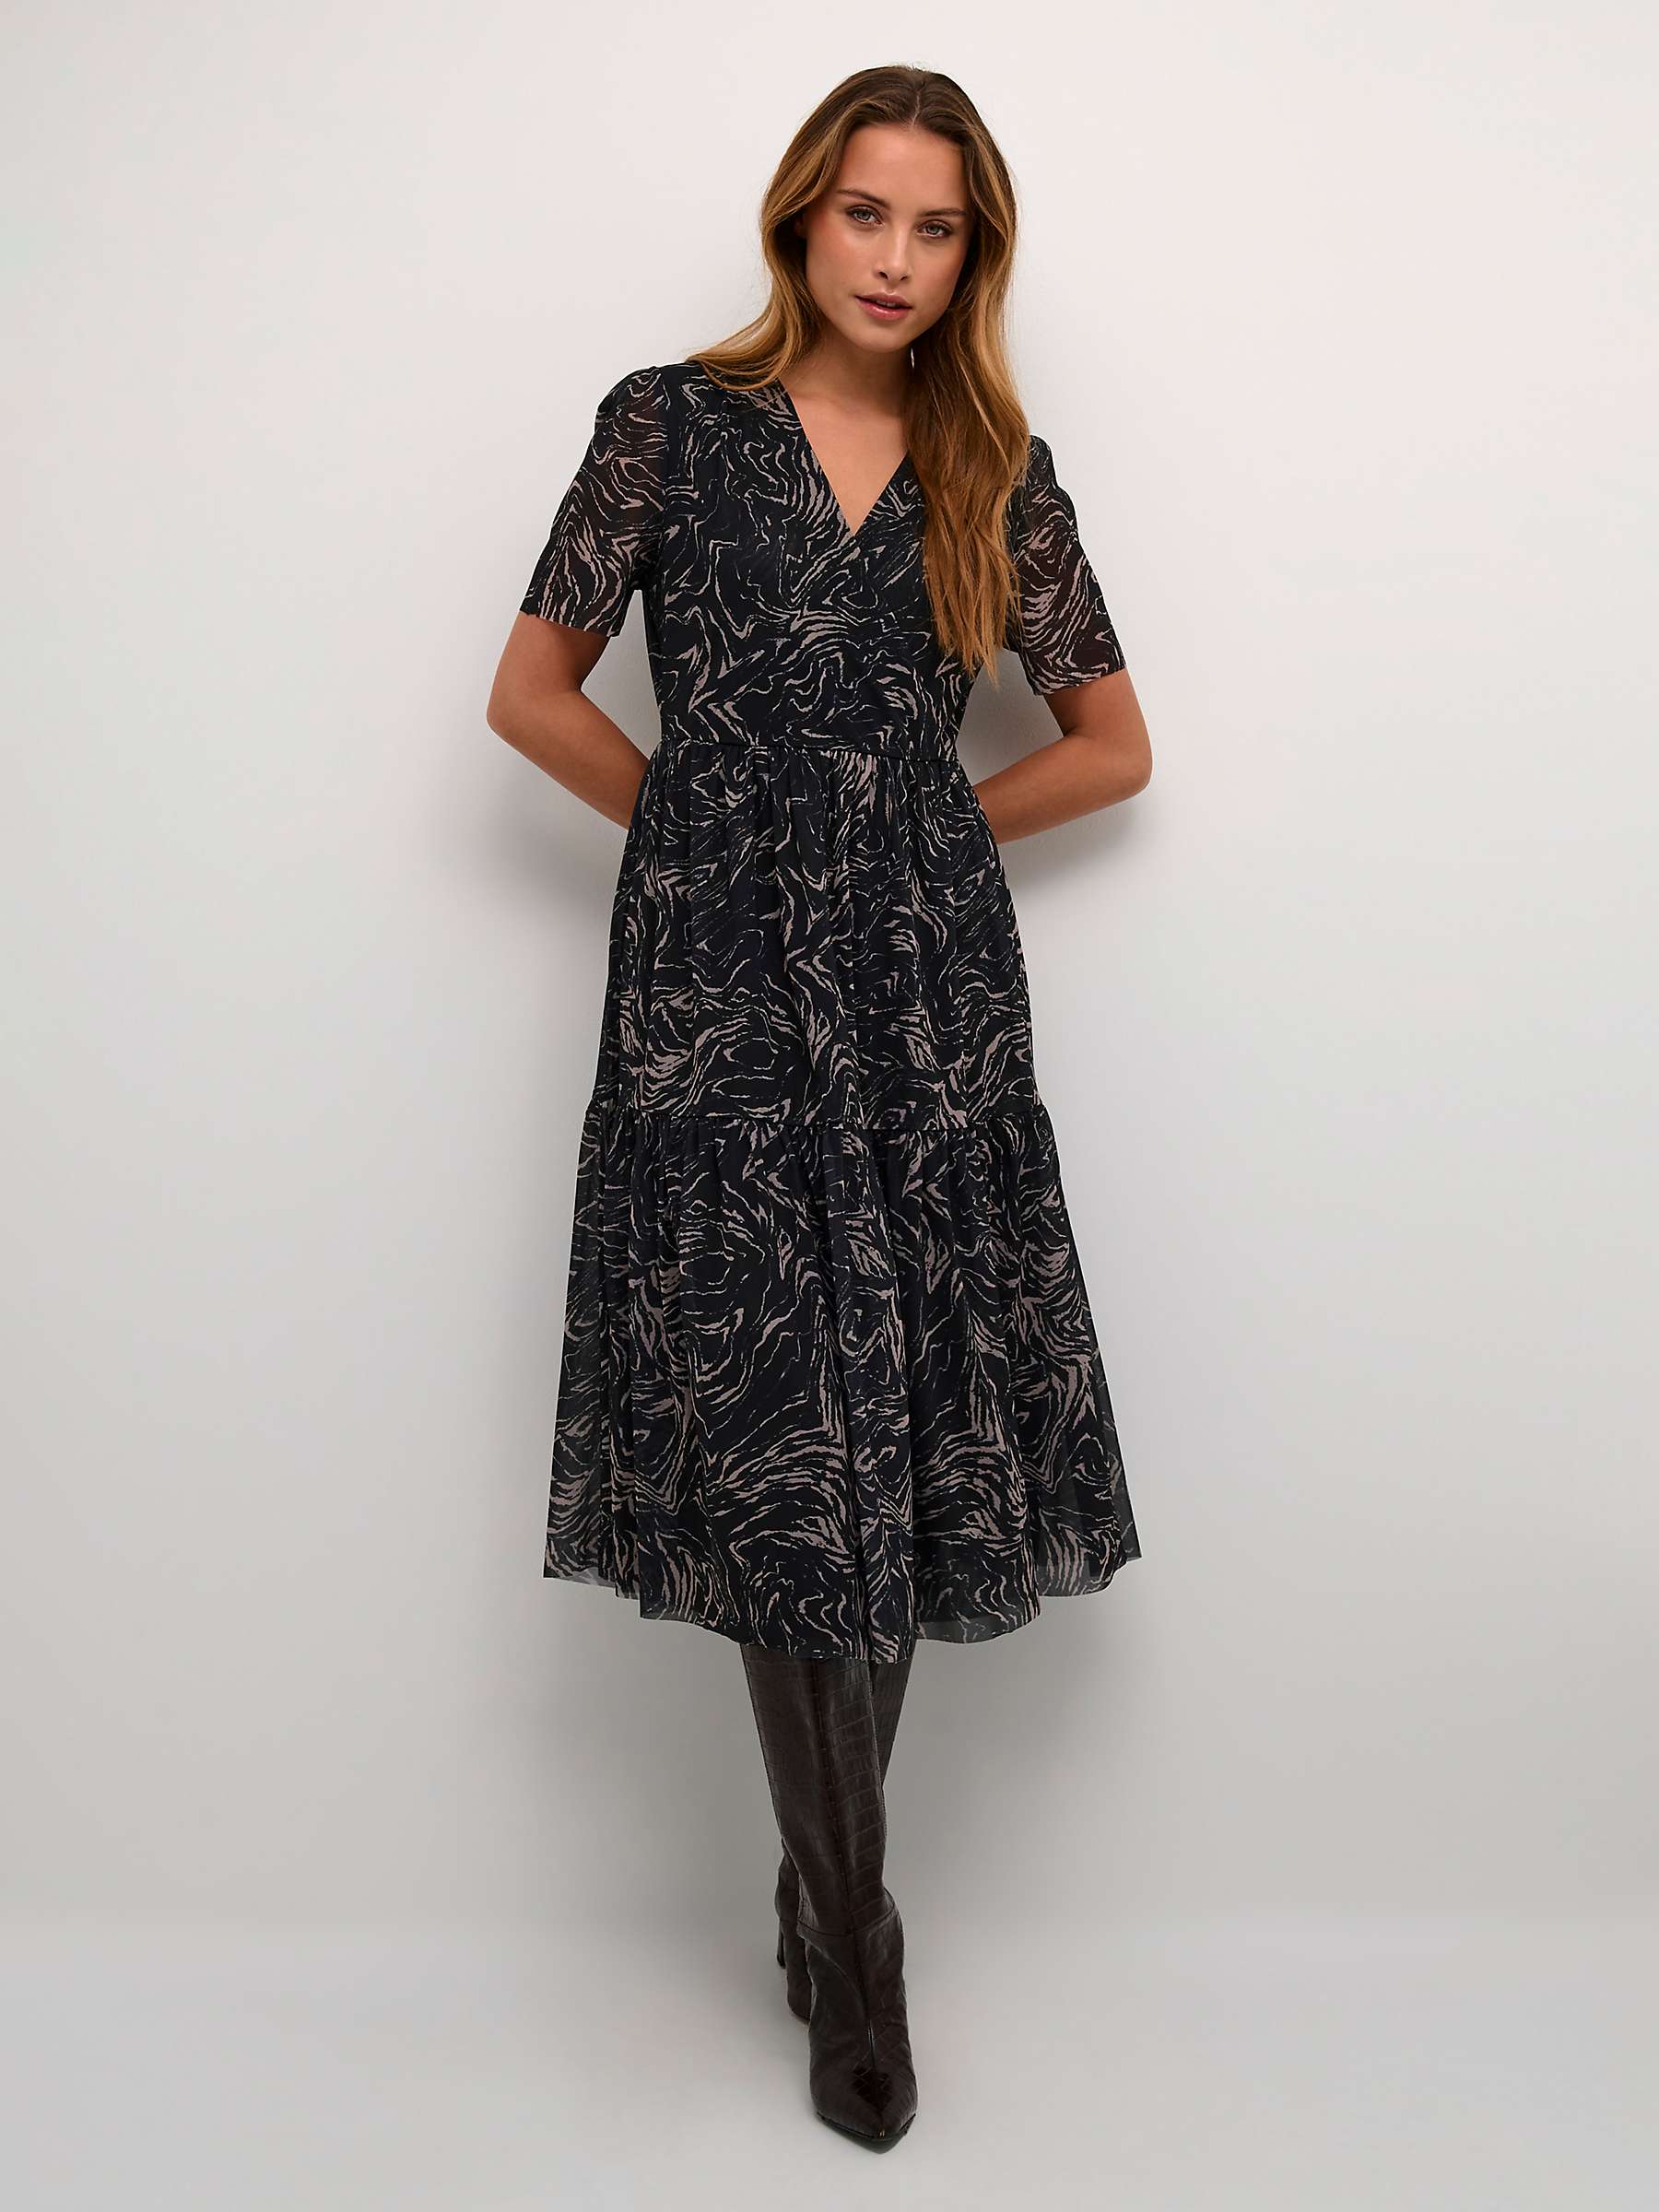 Buy Soaked In Luxury Aldora Mesh Short Sleeve Wrap Dress, Black Swirl Print Online at johnlewis.com